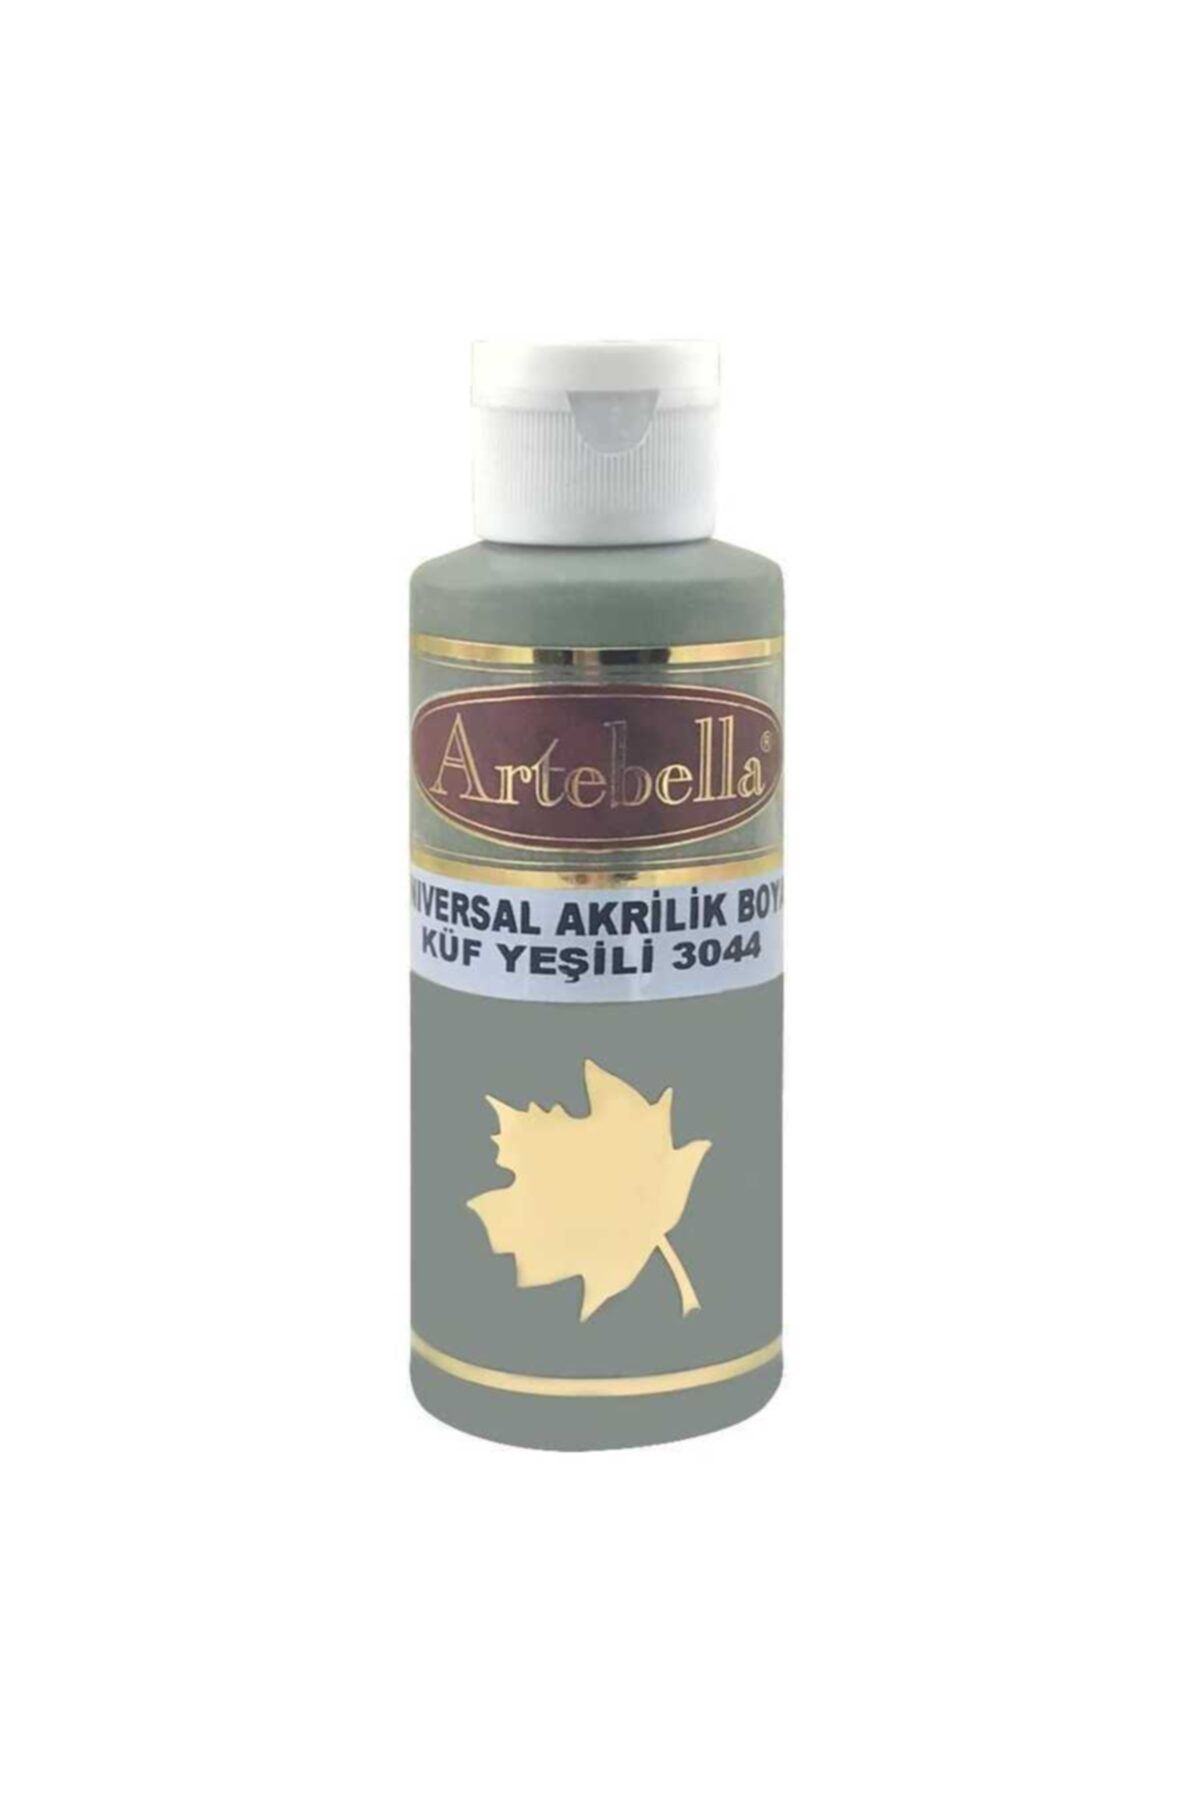 Artebella Universal Akrilik Boya I 3044 Küf Yeşili 130 ml